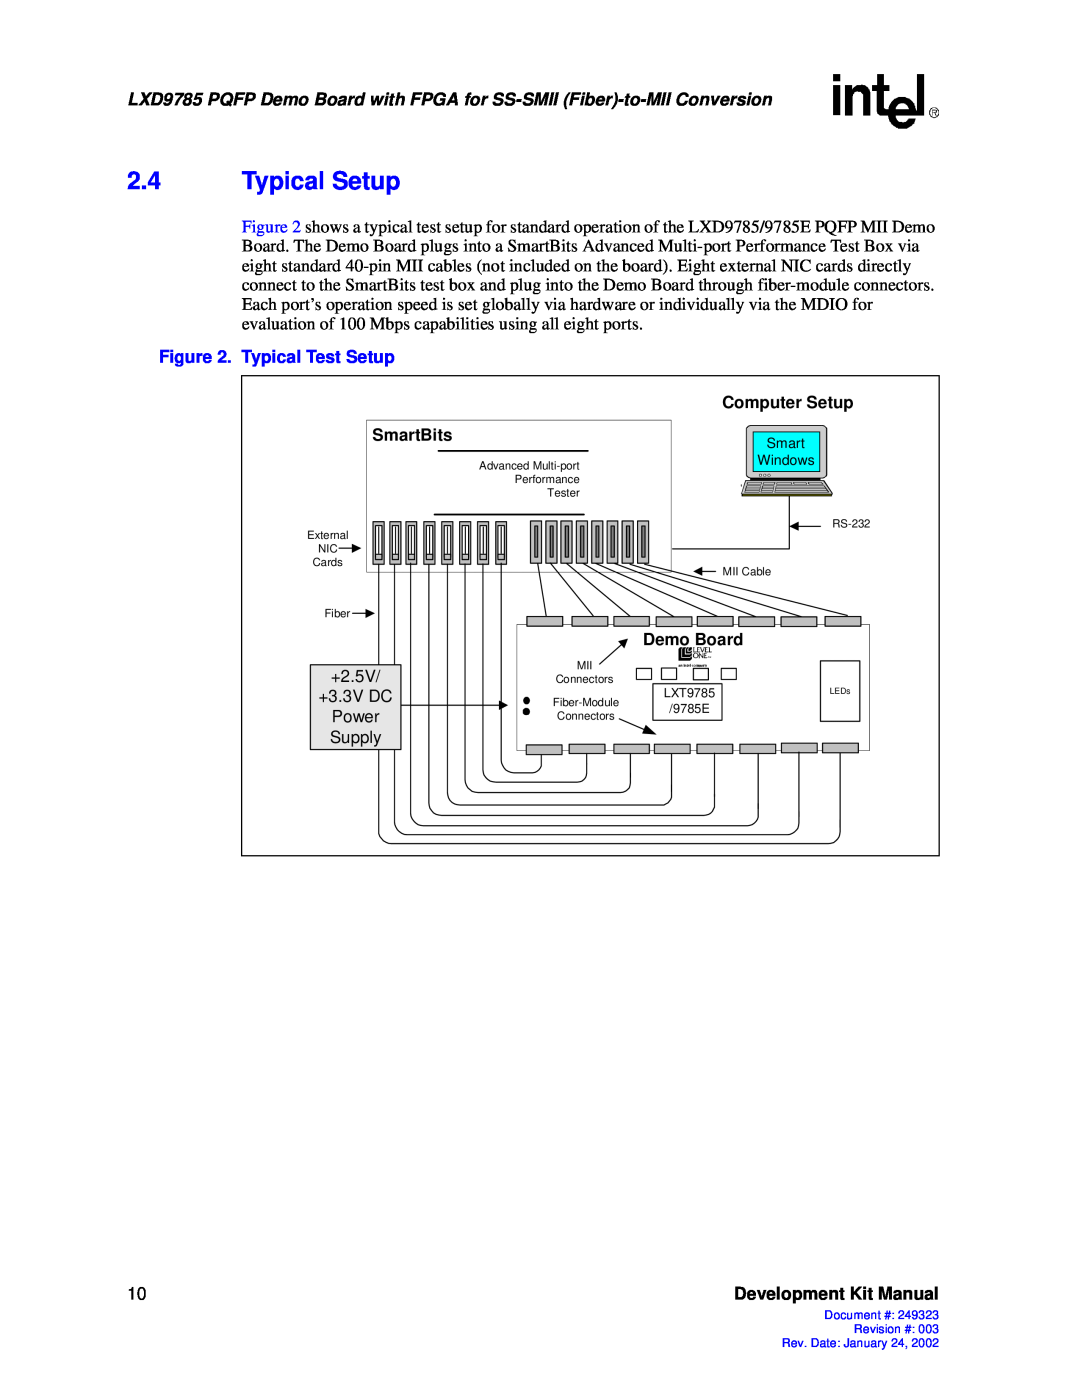 Intel 249323-003 manual Typical Setup, Typical Test Setup, SmartBits, Demo Board 